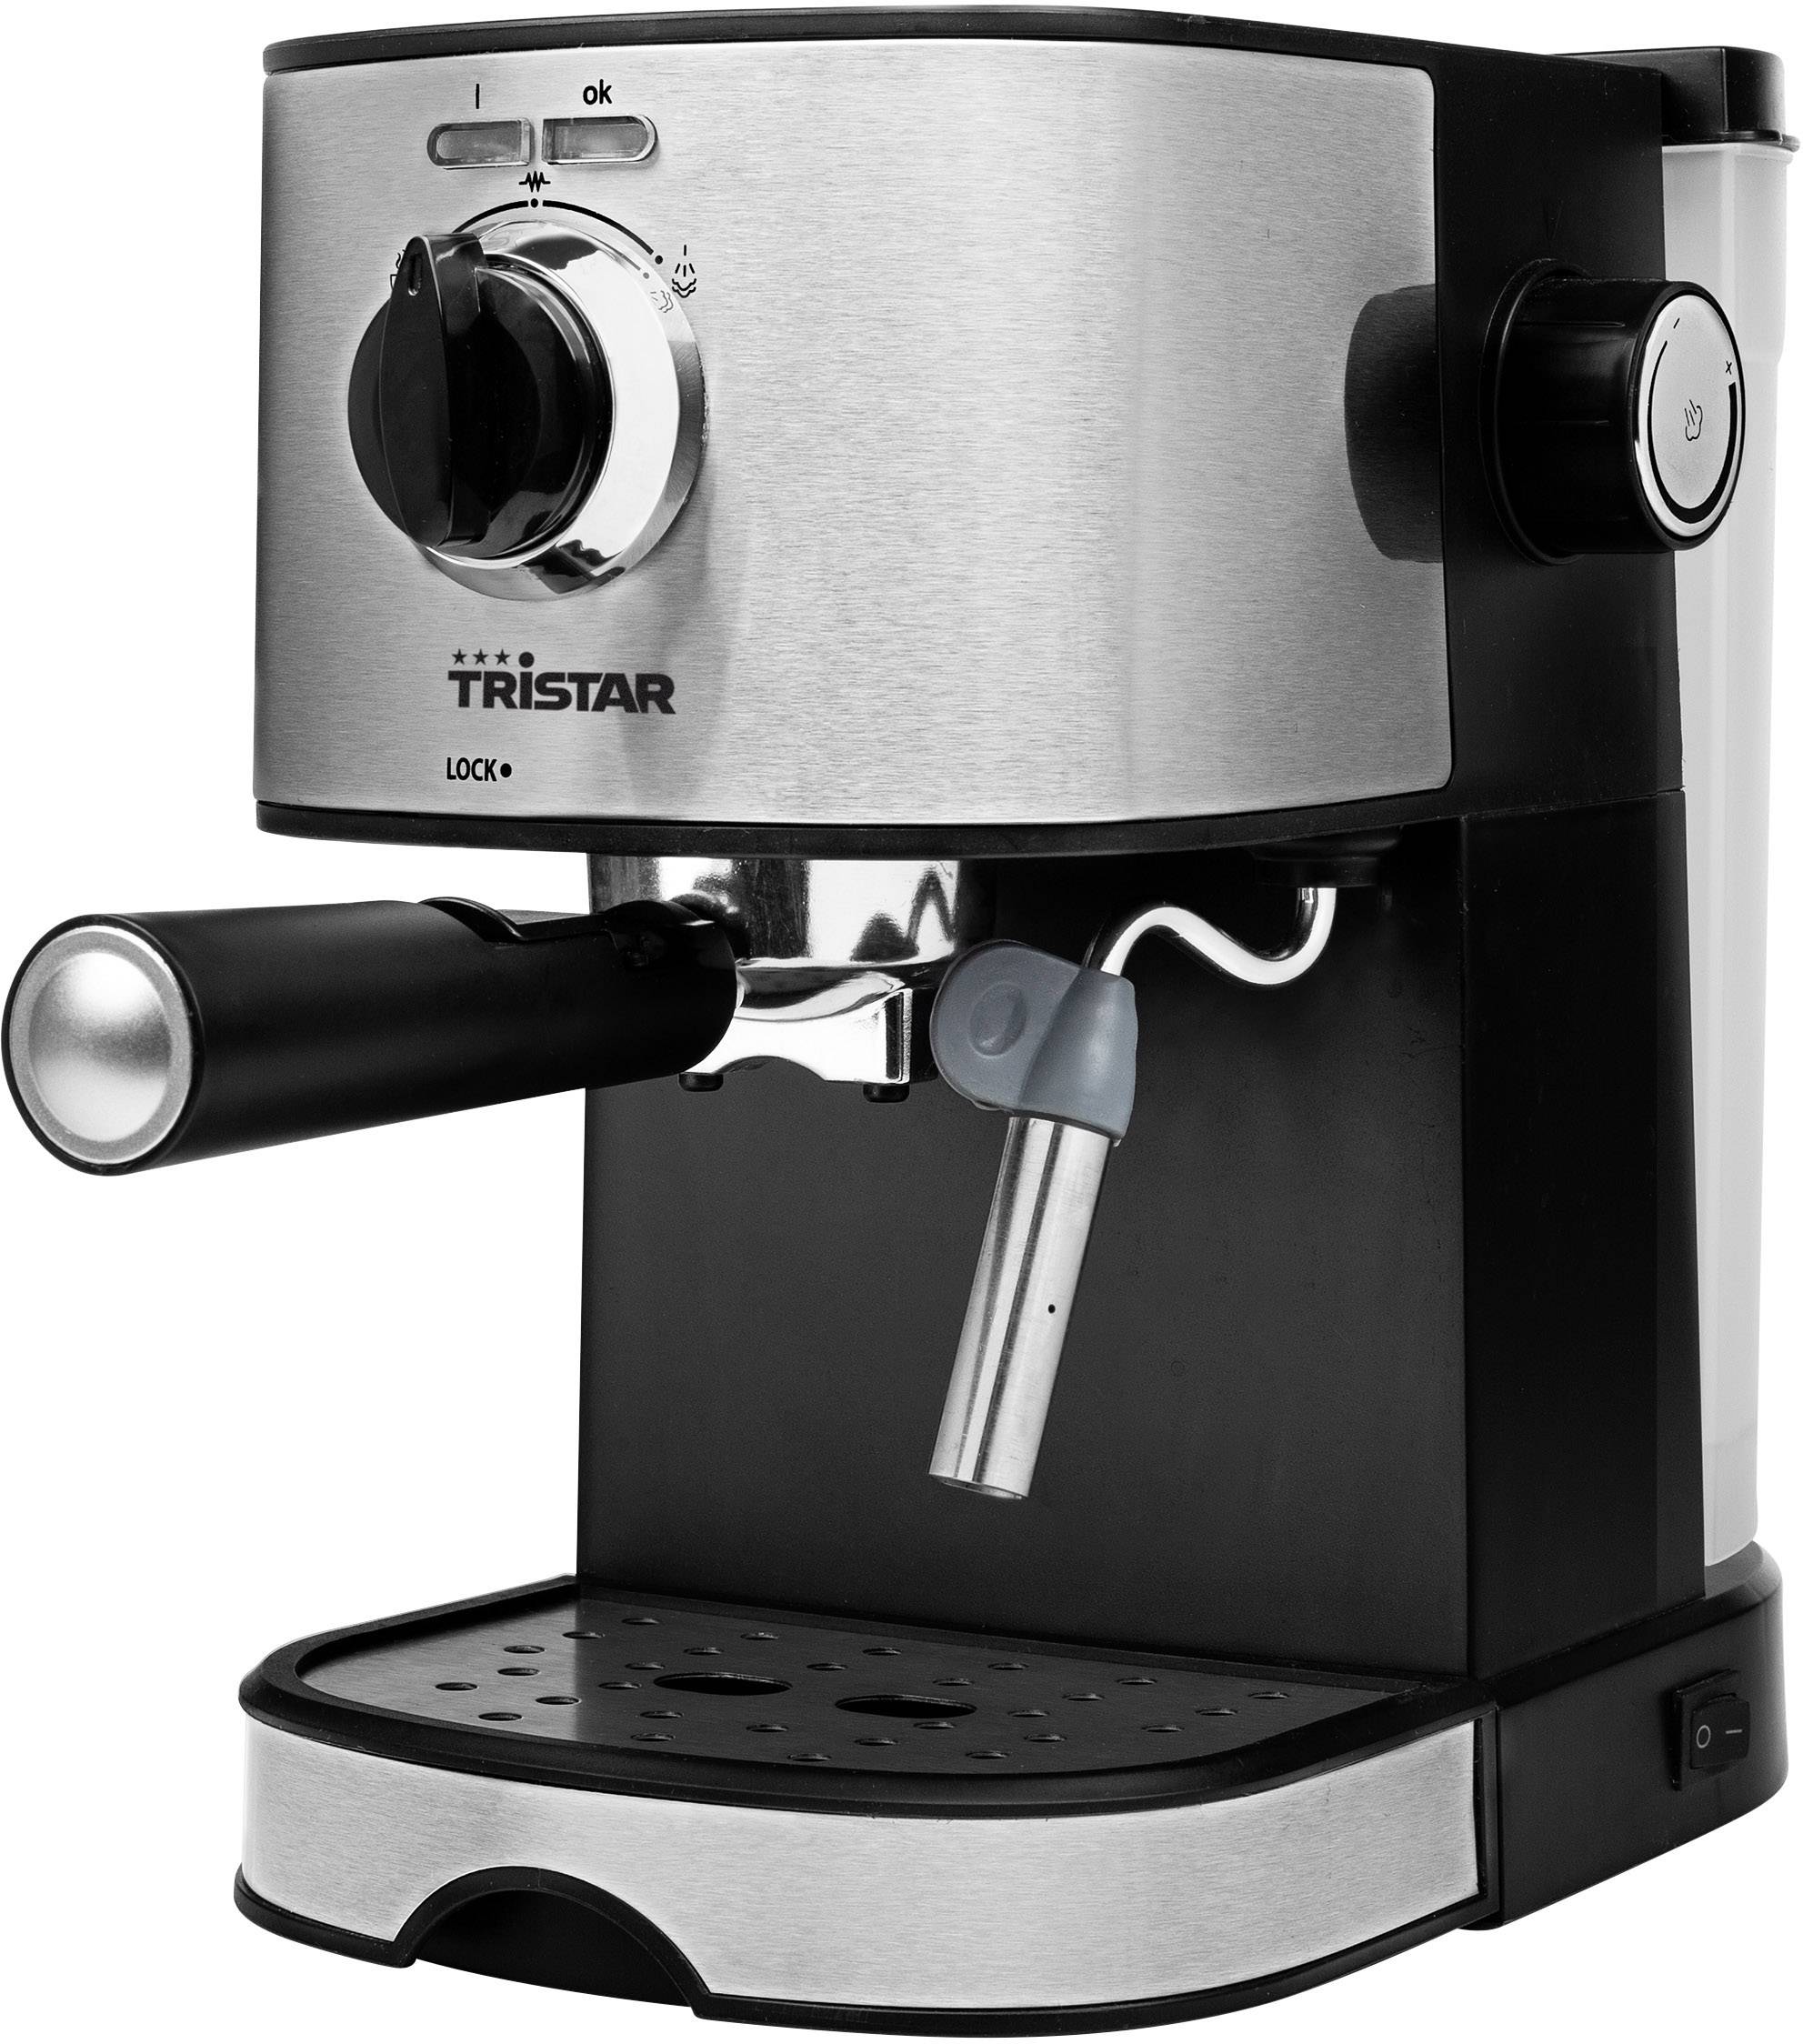 Tristar Espressomachine met filterhouder RVS, 750 W Conrad Electronic